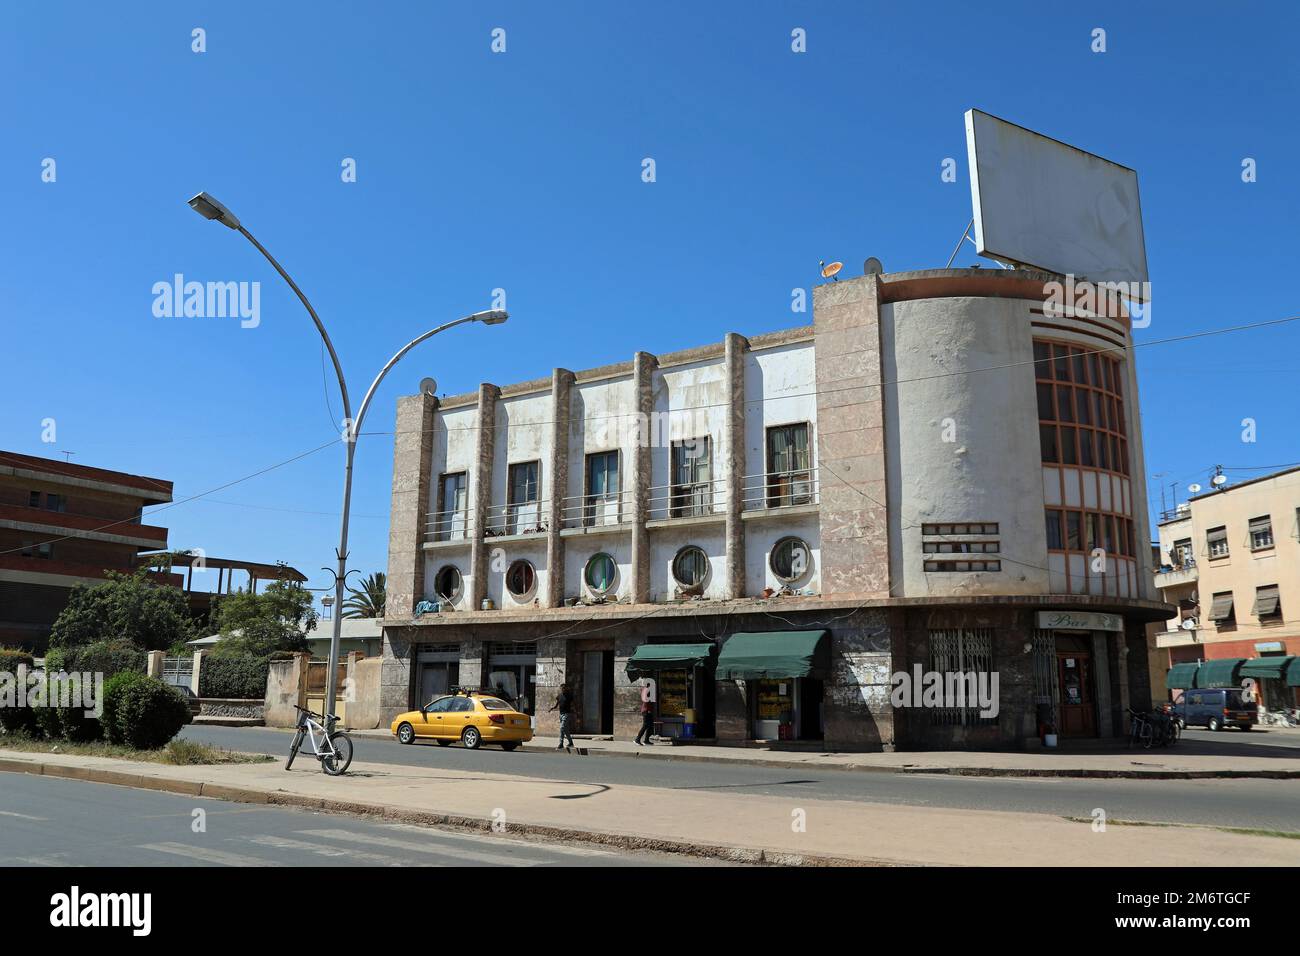 Iconic art deco style Bar Zilla building in Asmara Stock Photo